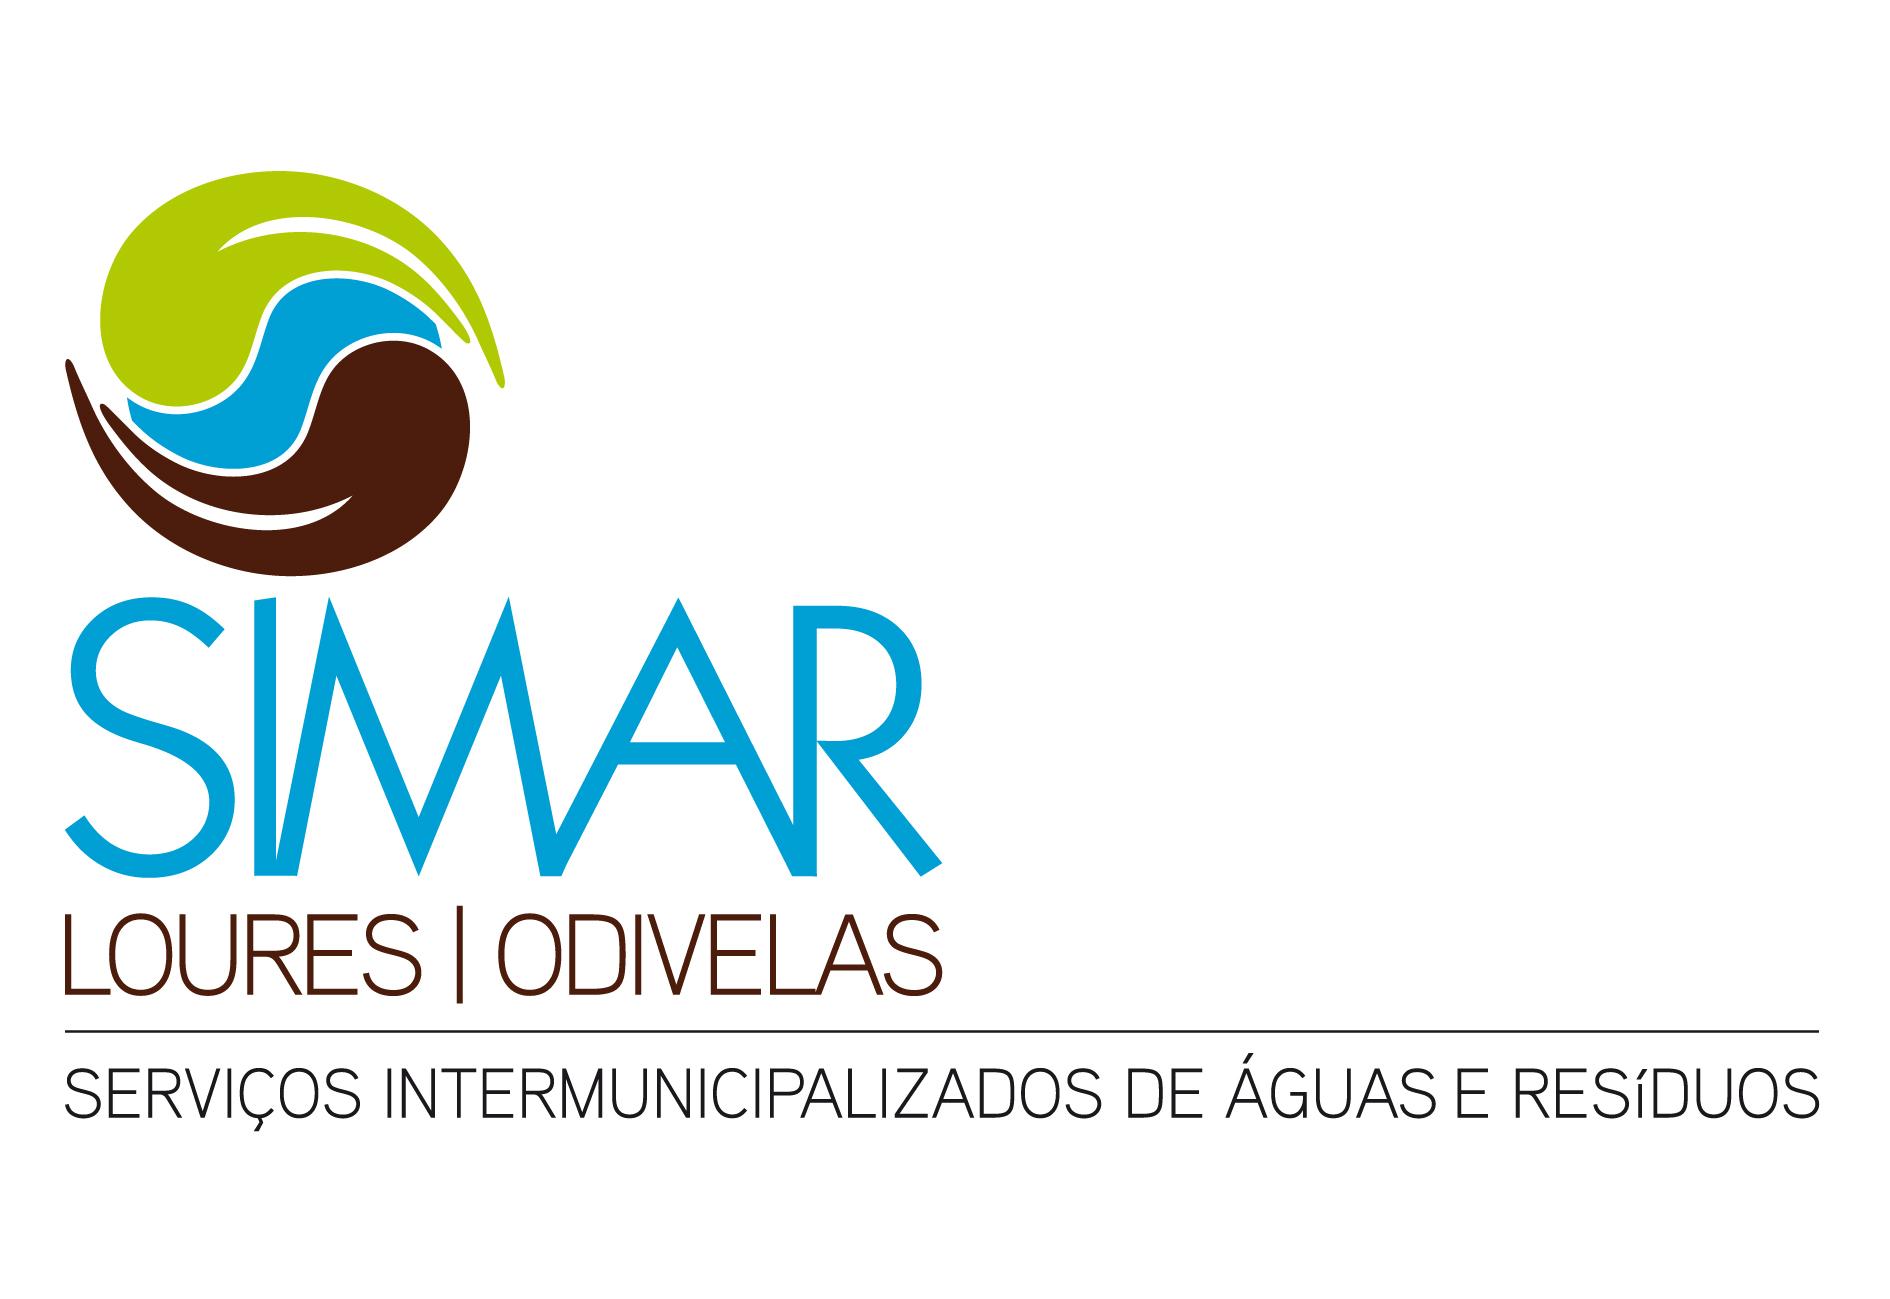 Logotipo SIMAR - Serviços Intermunicipalizados de Águas e Resíduos de Loures e Odivelas